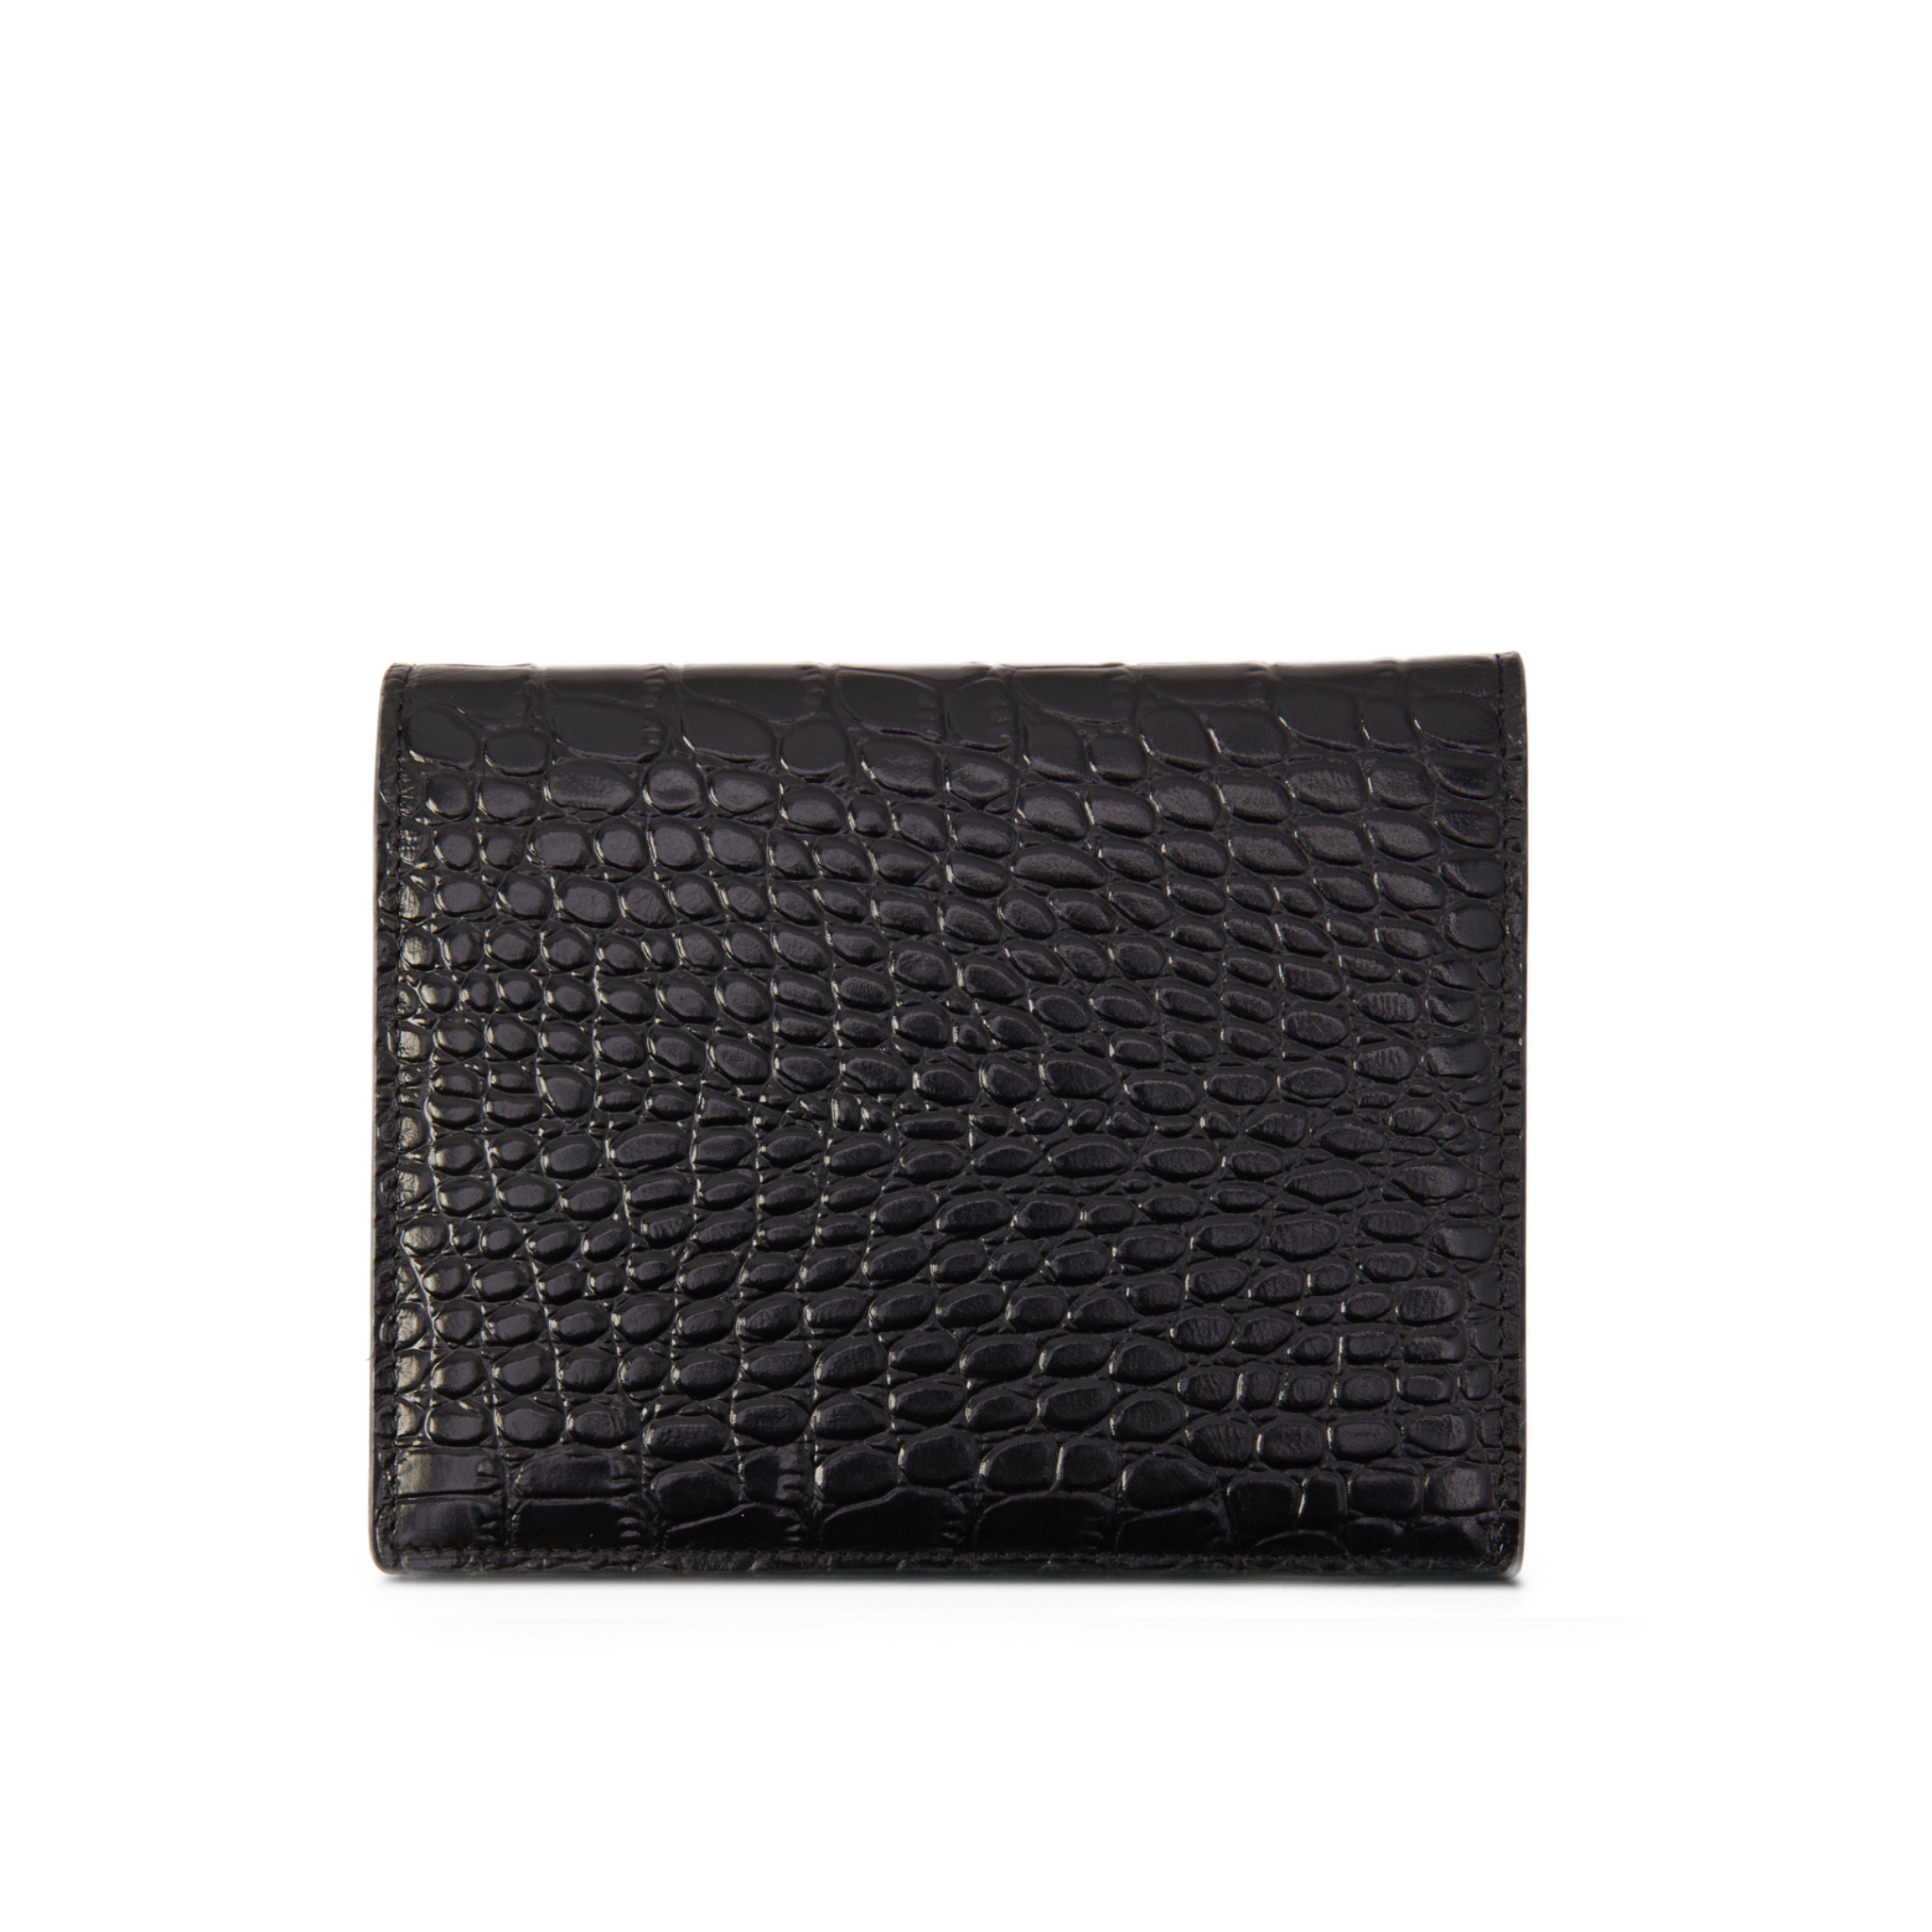 Chelsea Wallet Black Croc